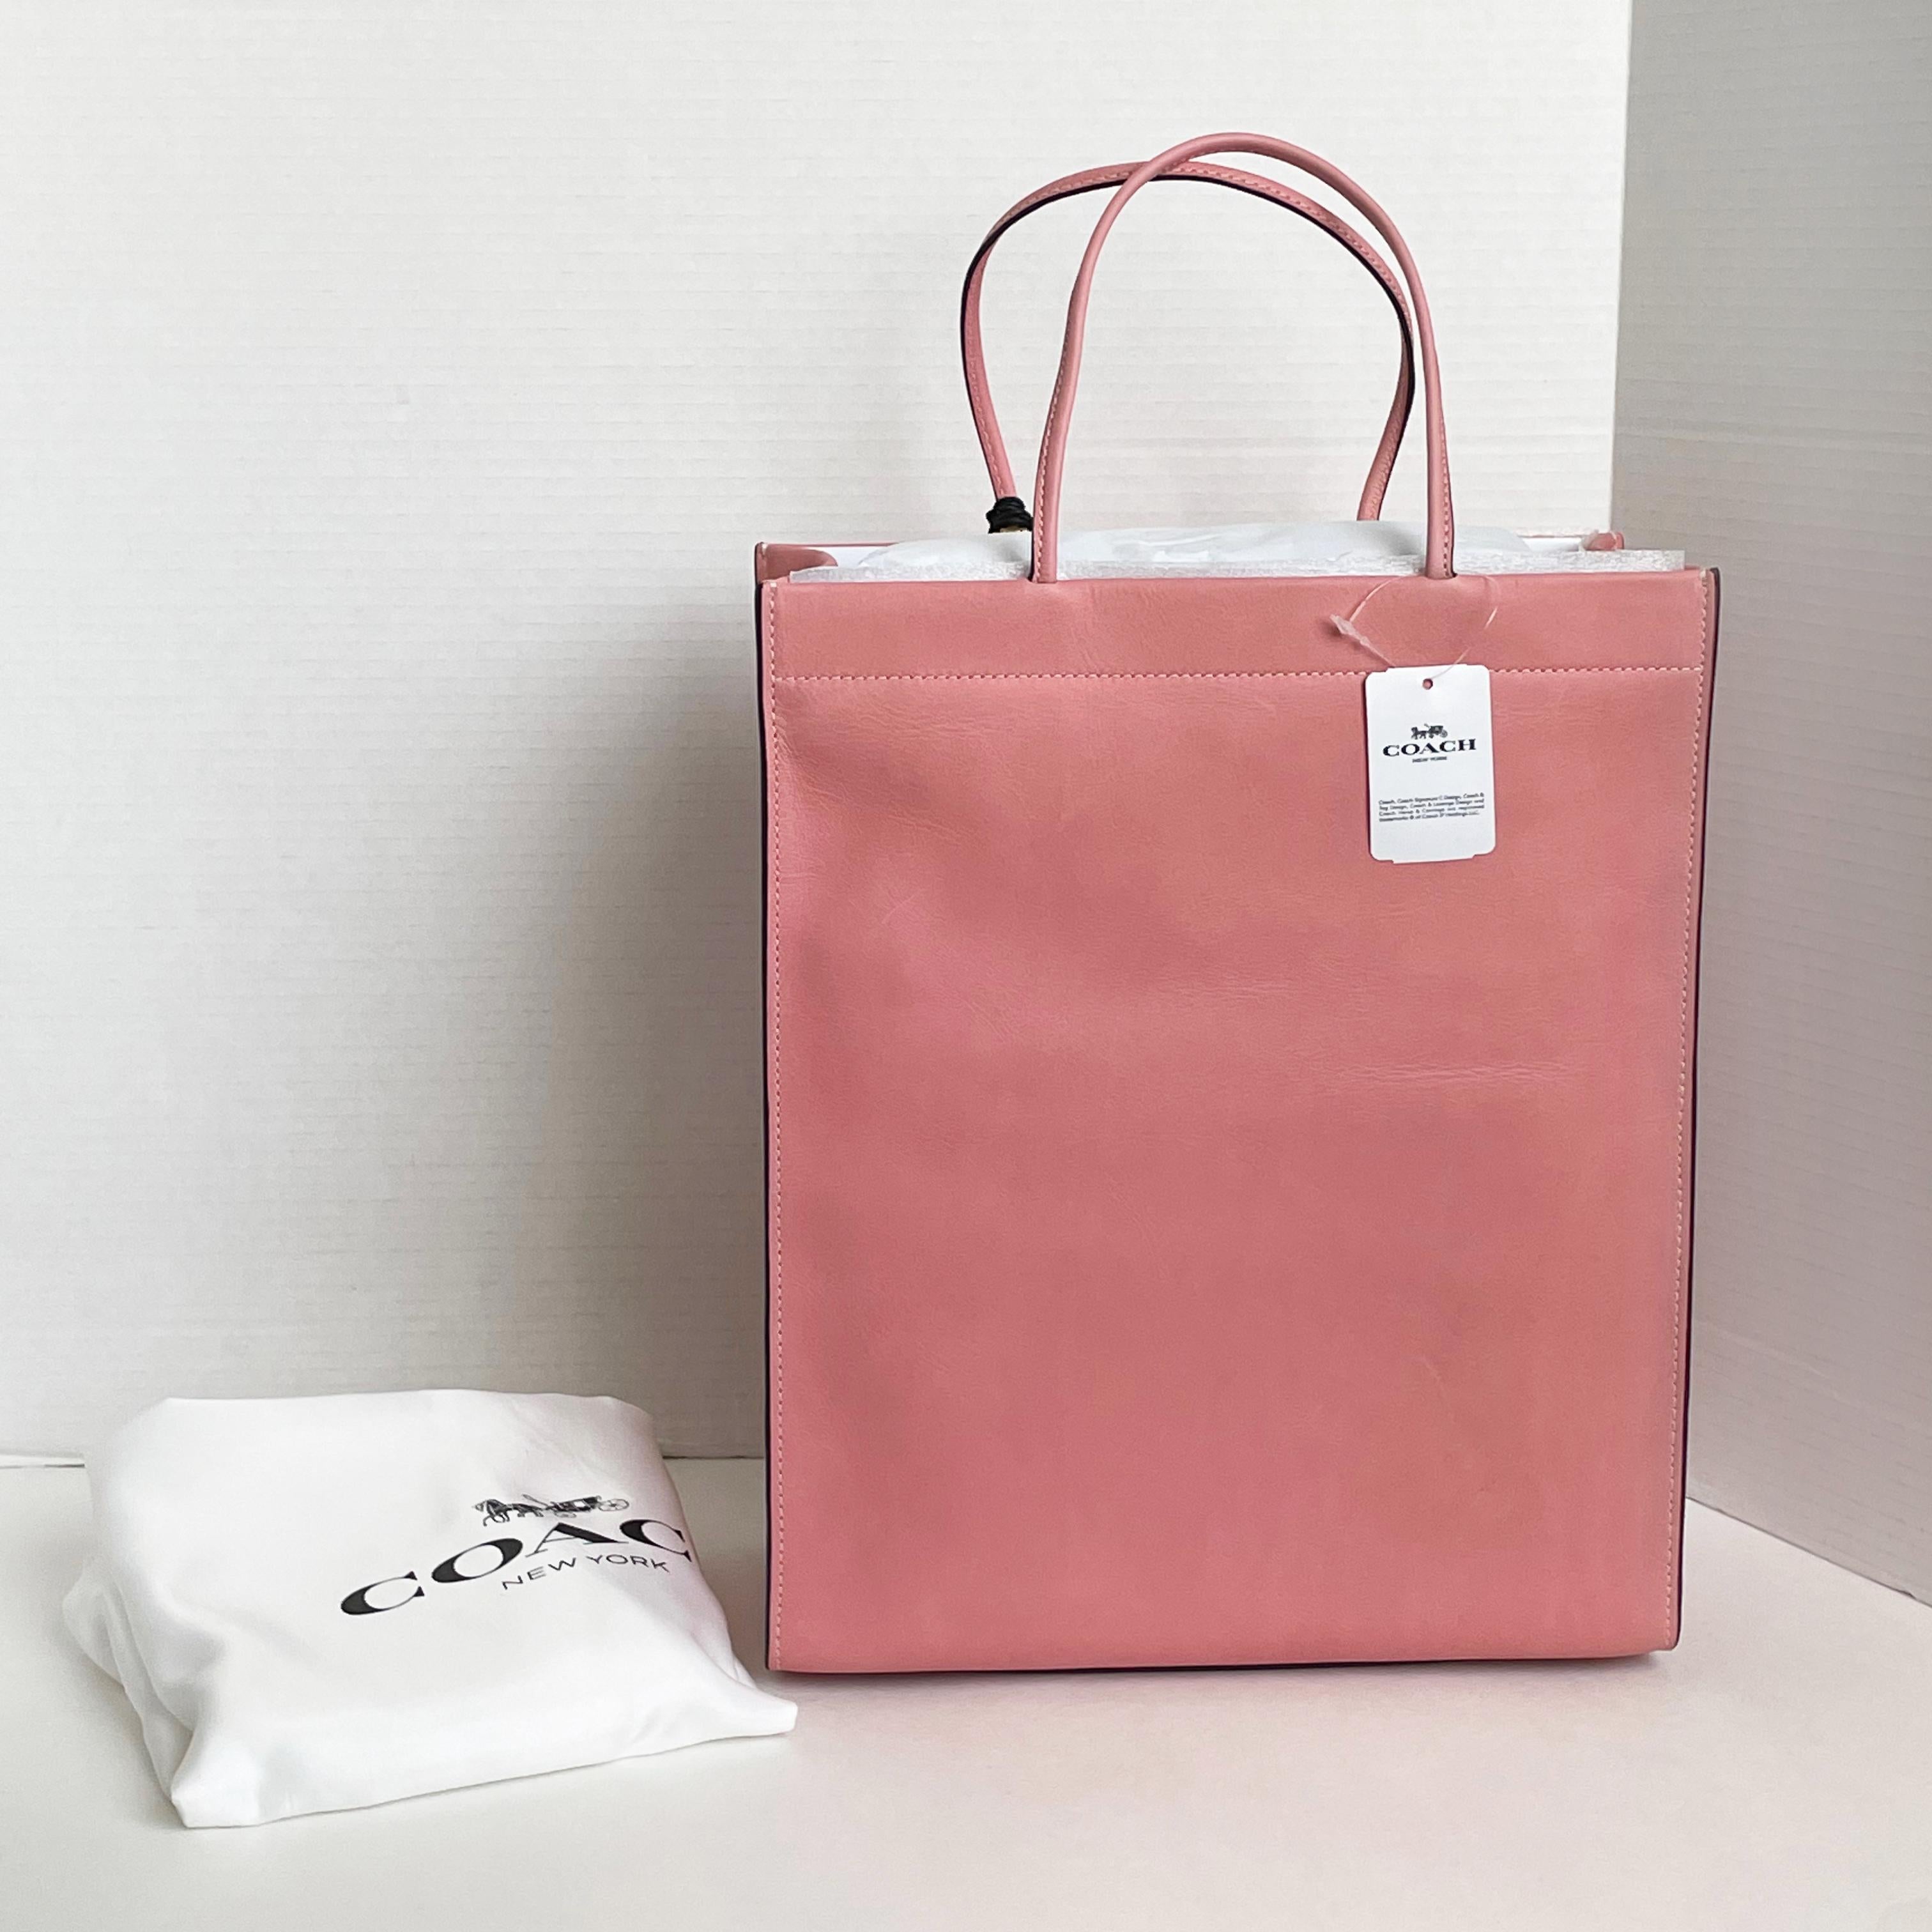 pink coach tote bag